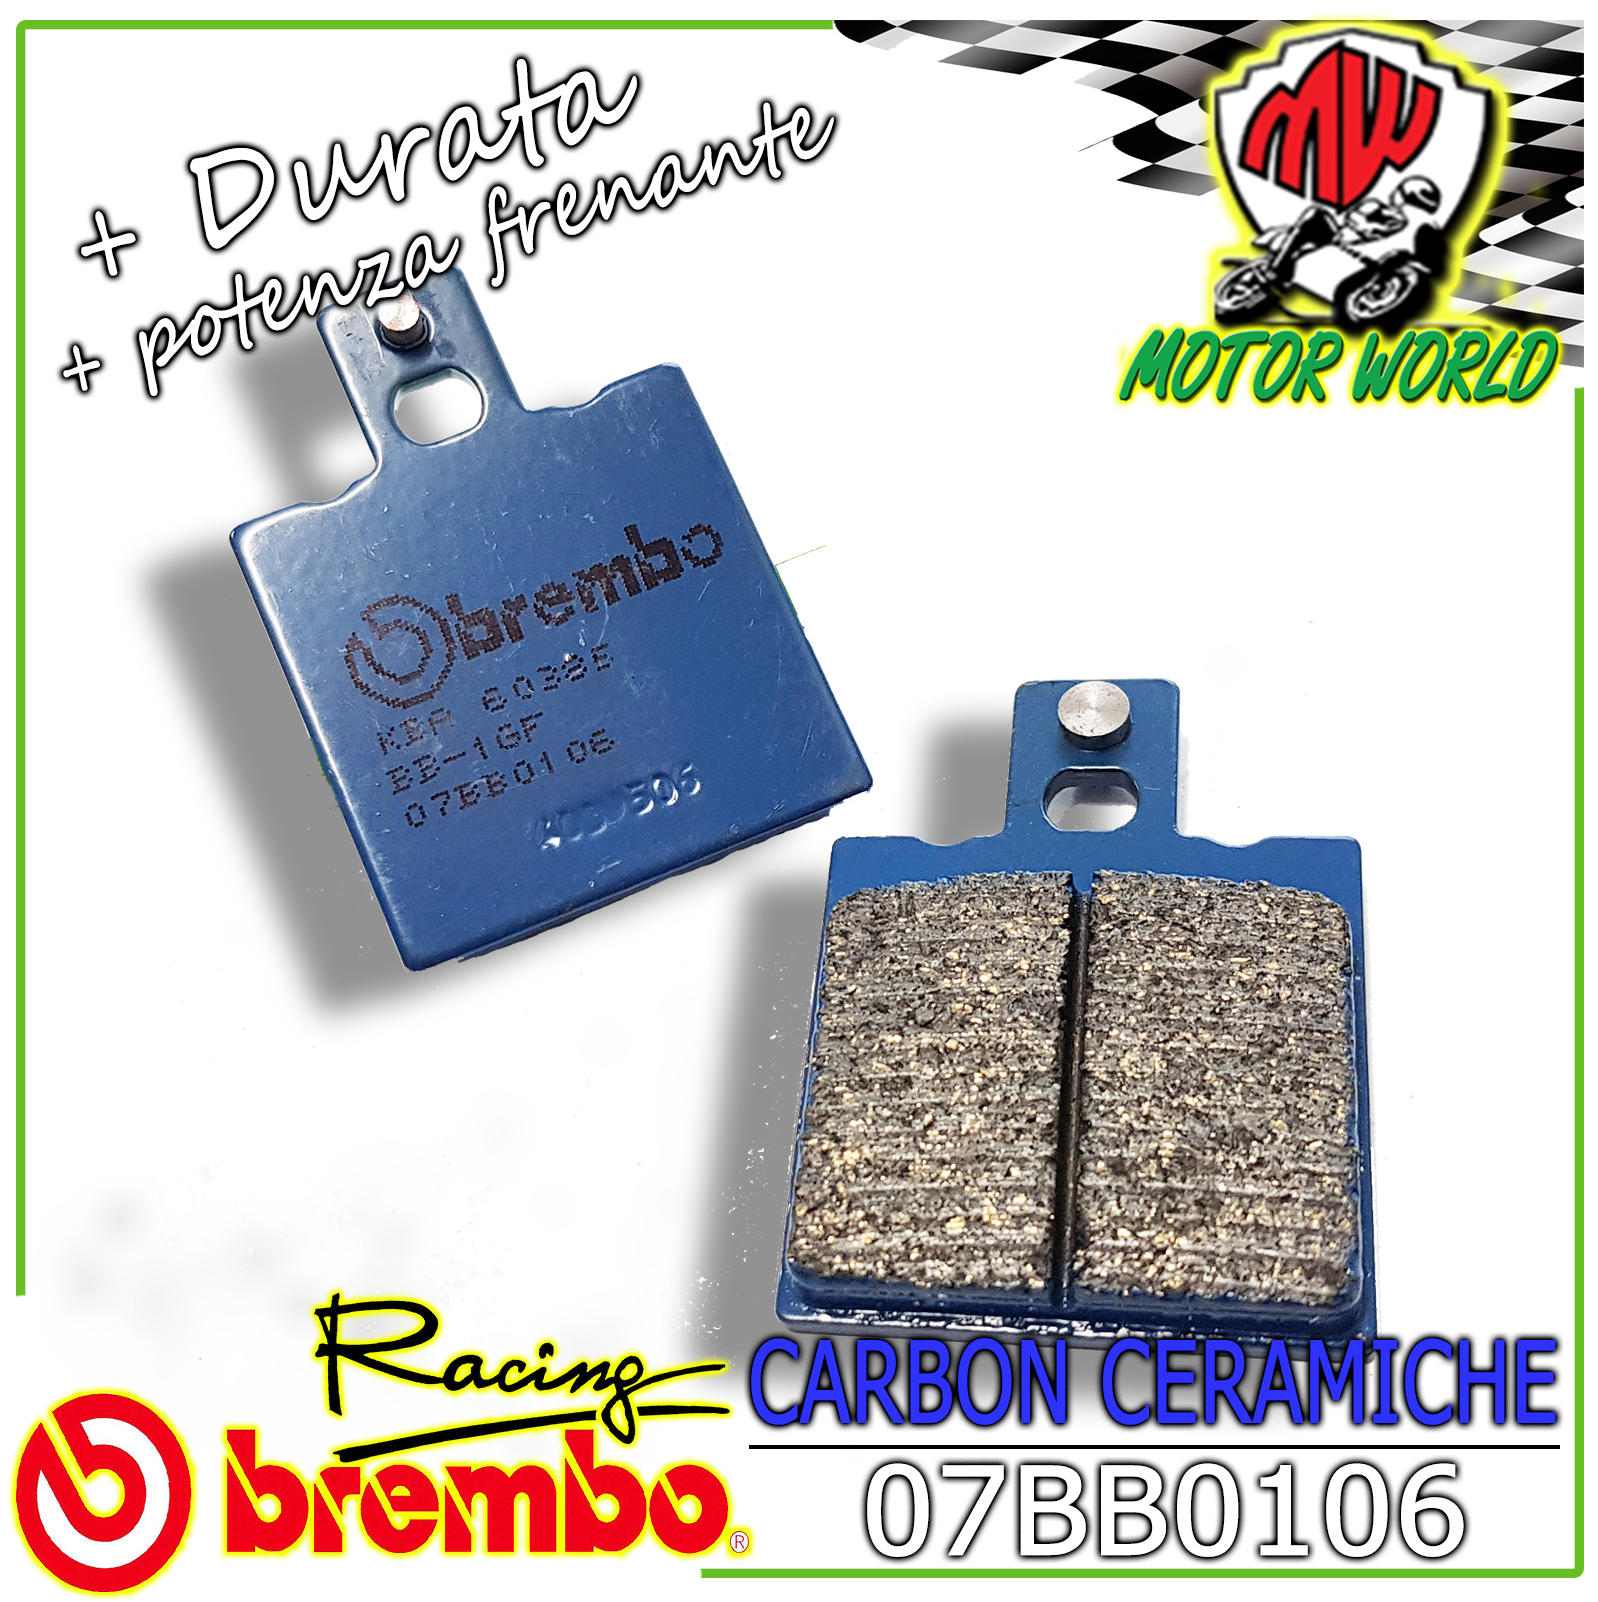 Bremsbeläge Brembo für Aprilia Tuareg 660 (22-) XC - Carbon